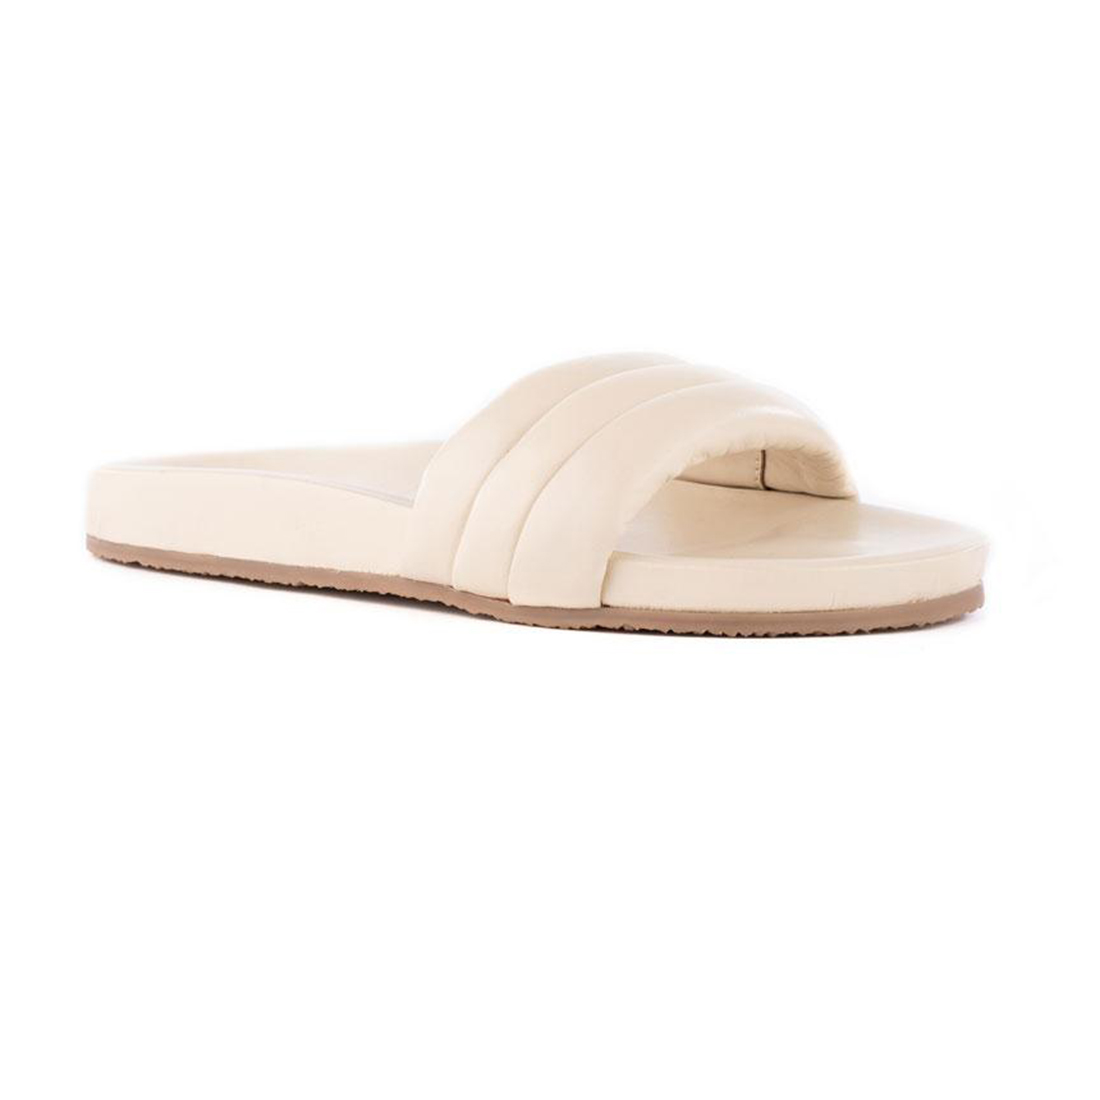 seychelles low key slide sandal in ivory leather 92621